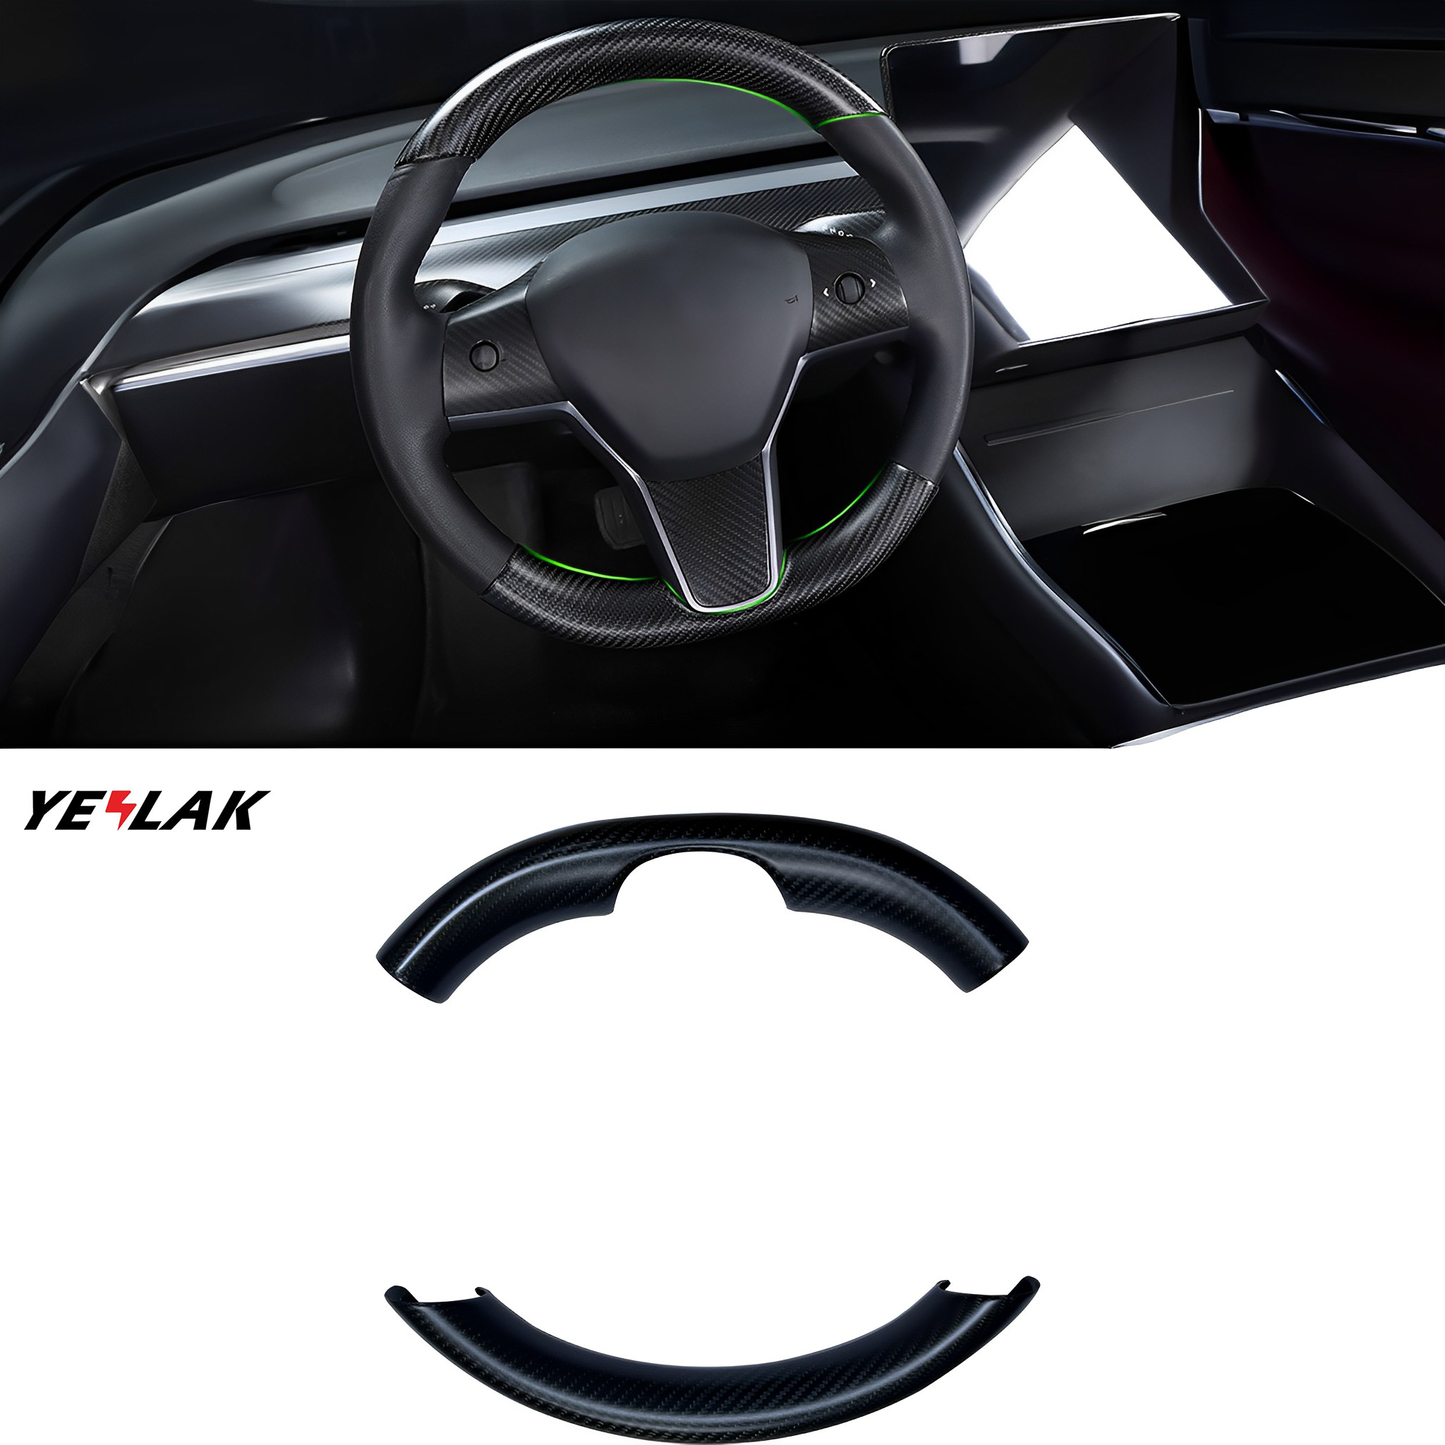 Telsa Model 3 Y Real Carbon Fiber Steering Wheel Cover Tesla Accessories